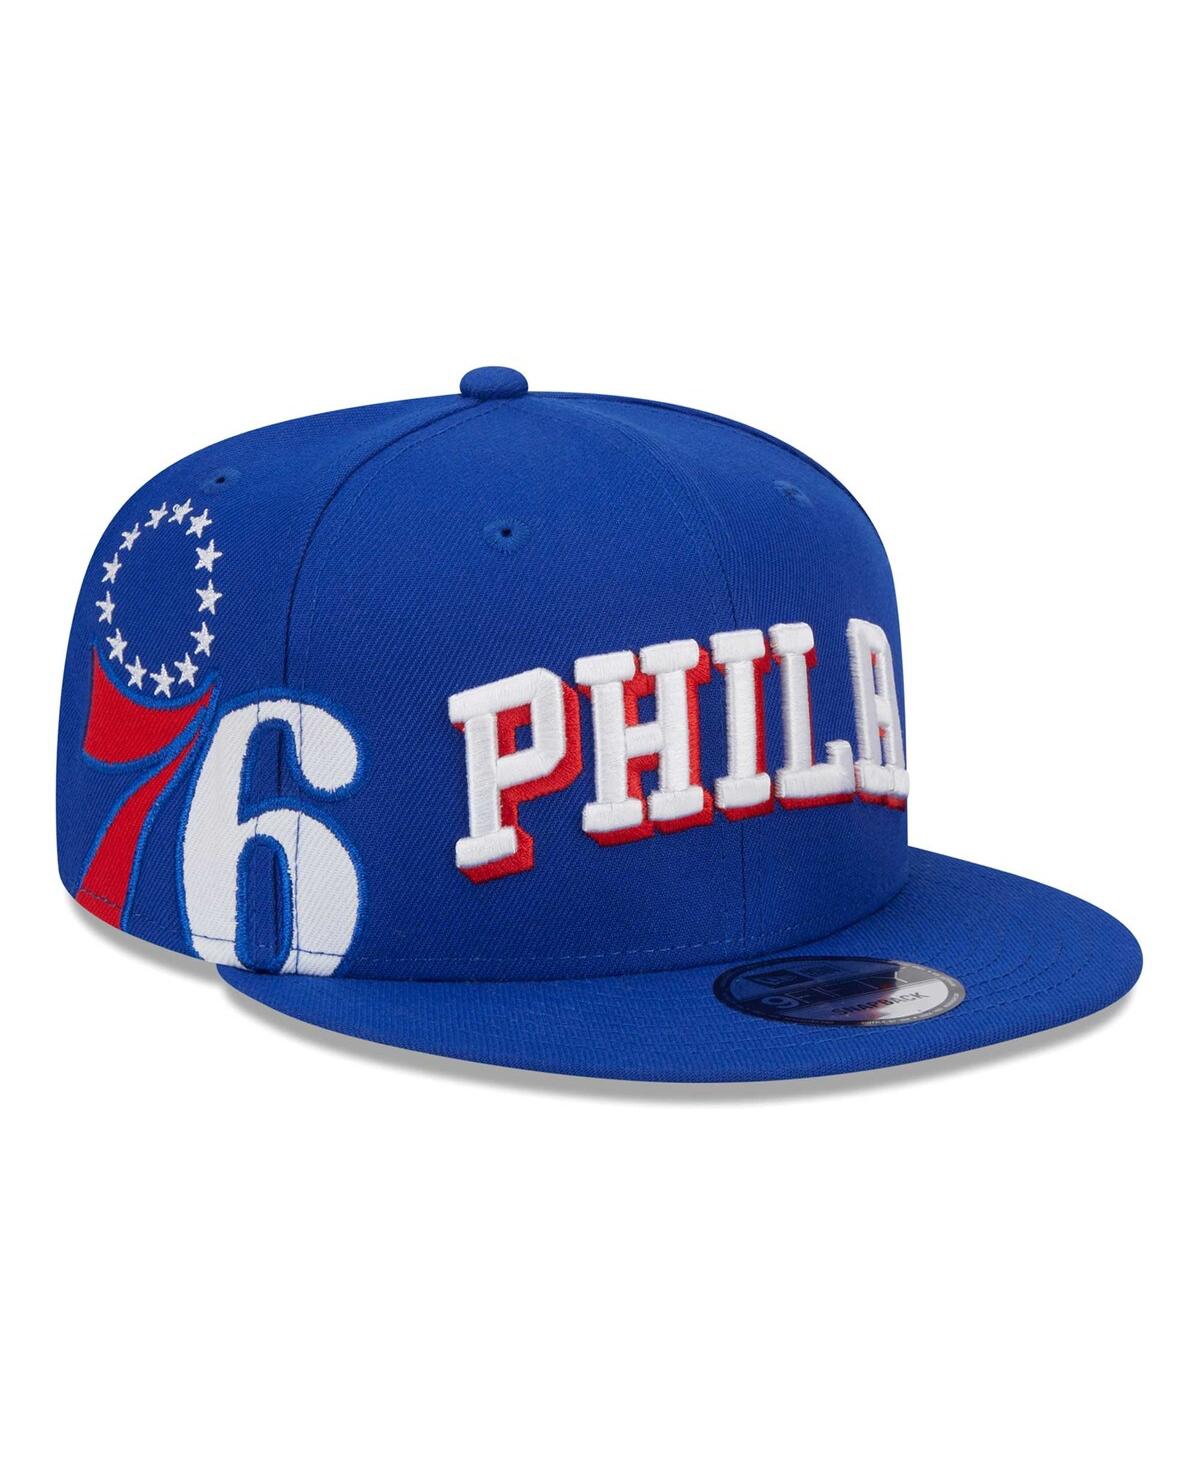 Men's Royal Philadelphia 76ers Side Logo 9fifty Snapback Hat - Royal